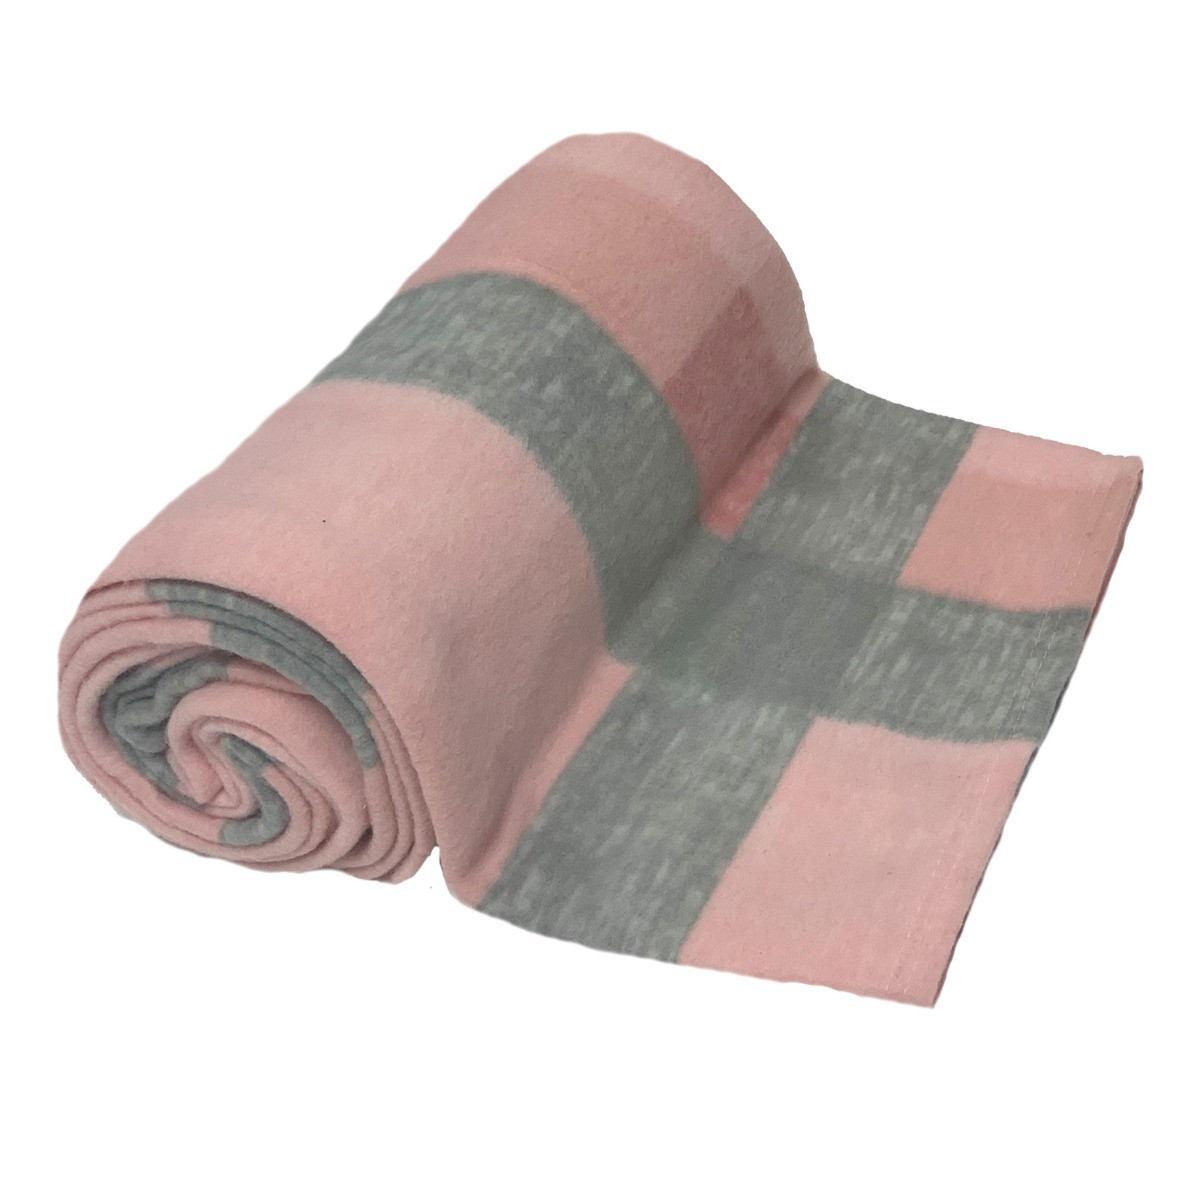 Dreamscene Tartan Check Fleece Throw, Blush Pink/Grey - 120 x 150 cm>